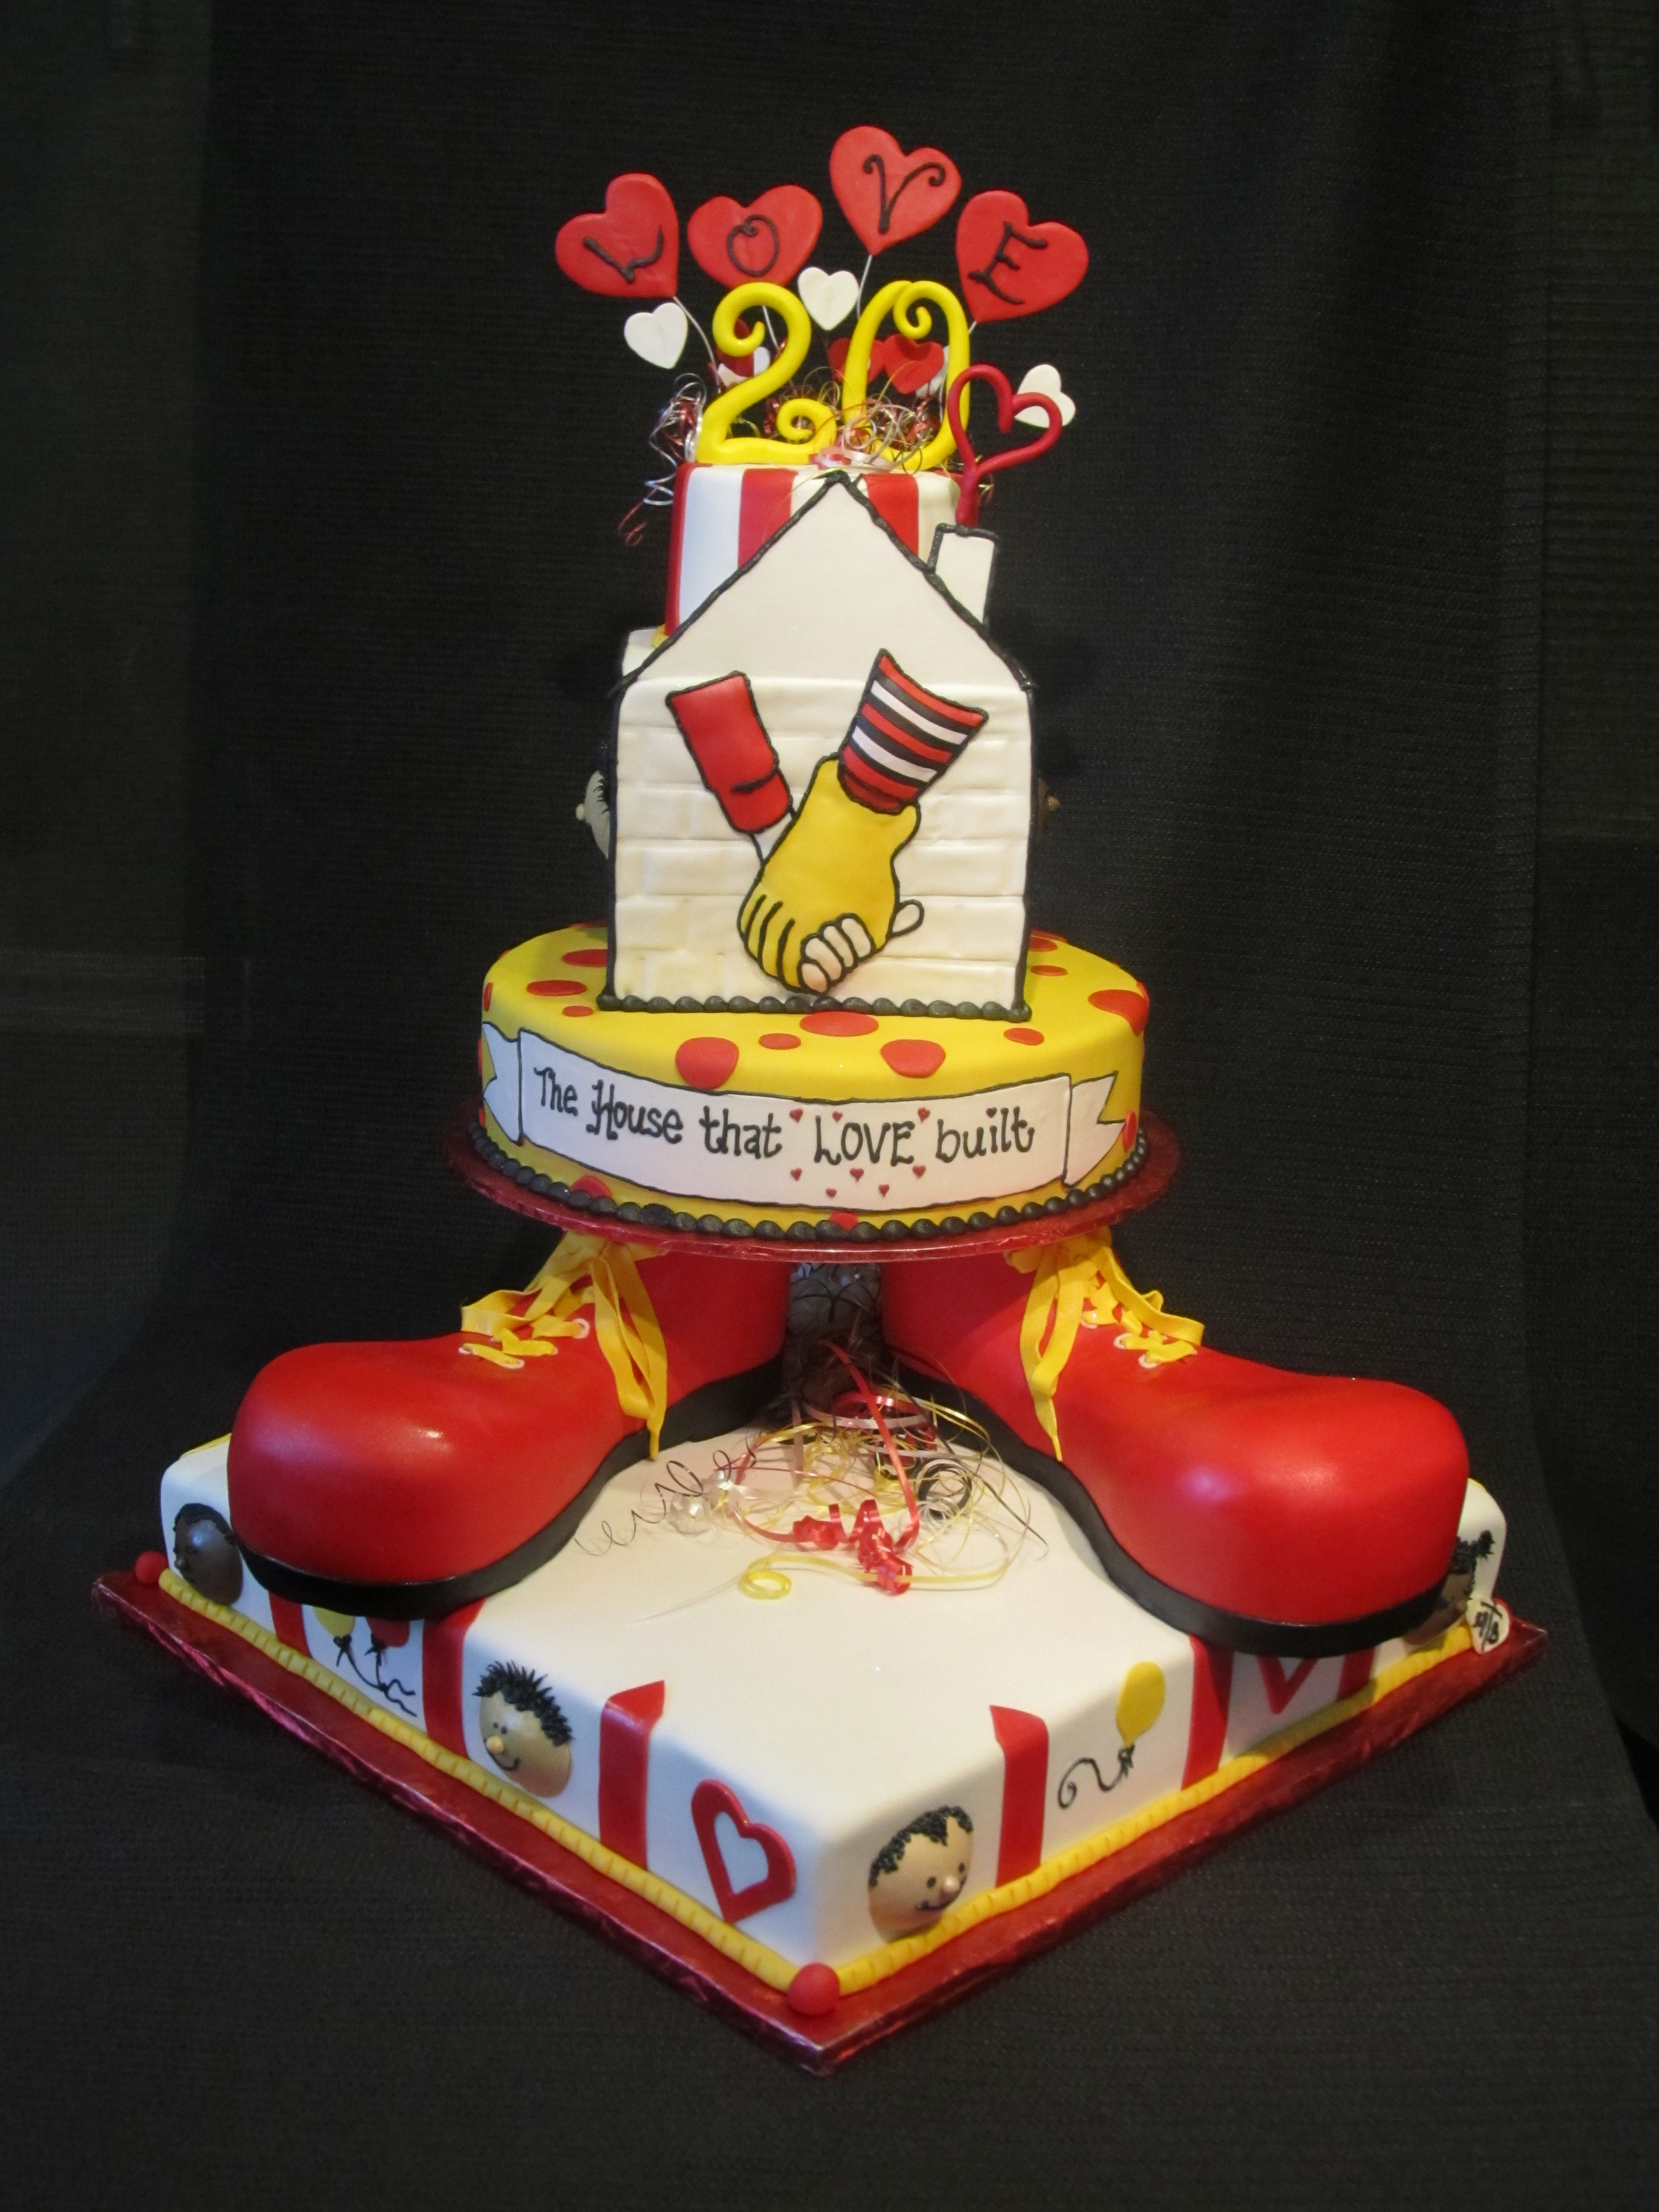 Best ideas about Mcdonalds Birthday Cake
. Save or Pin Ronald McDonald Celebration Cake Now.